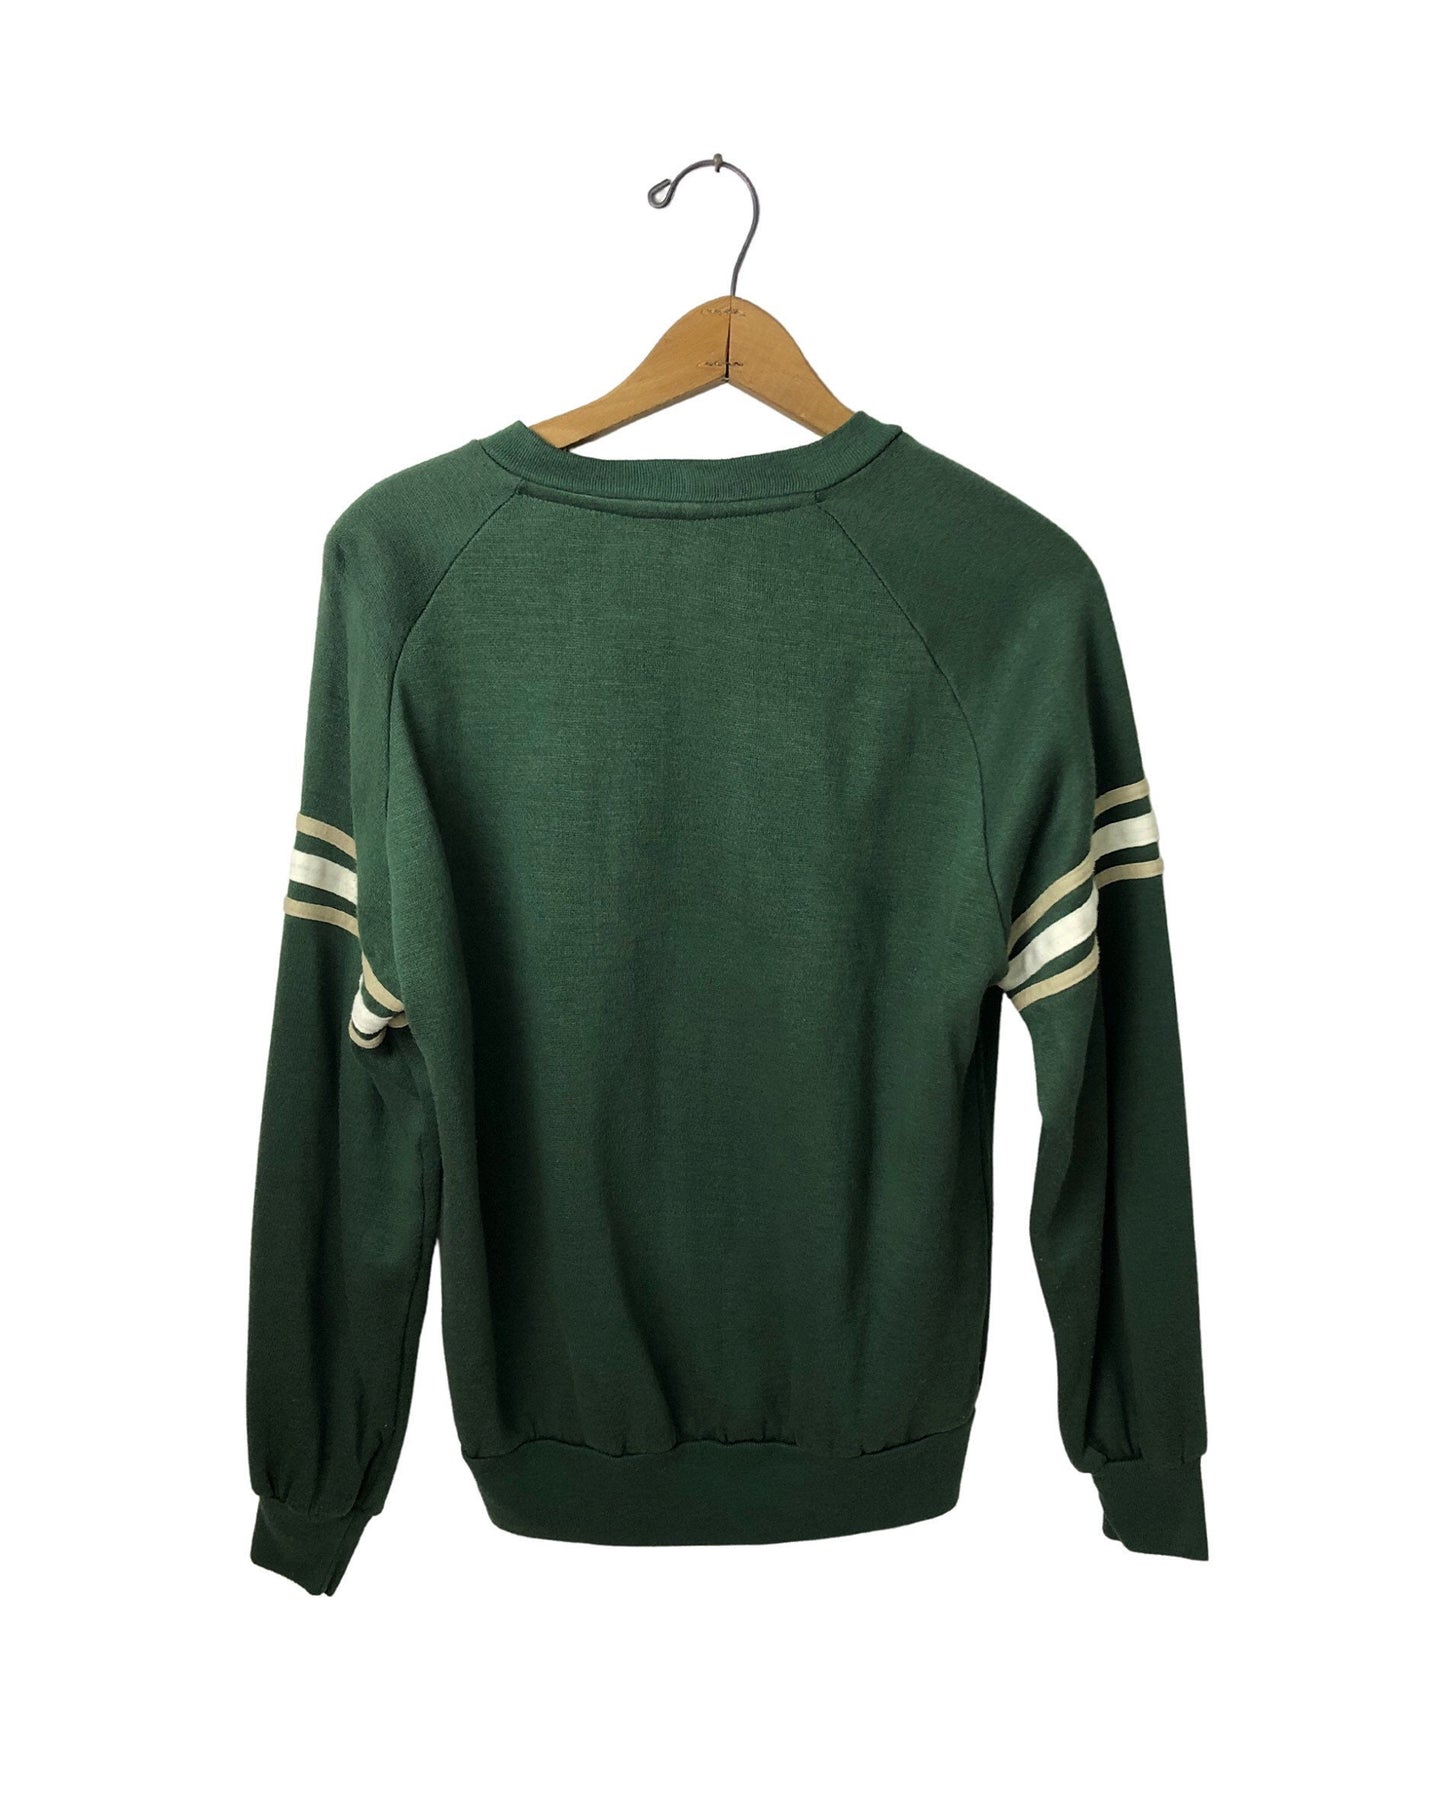 80’s Sun Spots Plain Green V-Neck Striped Retro Raglan Sweatshirt Pullover Size Medium